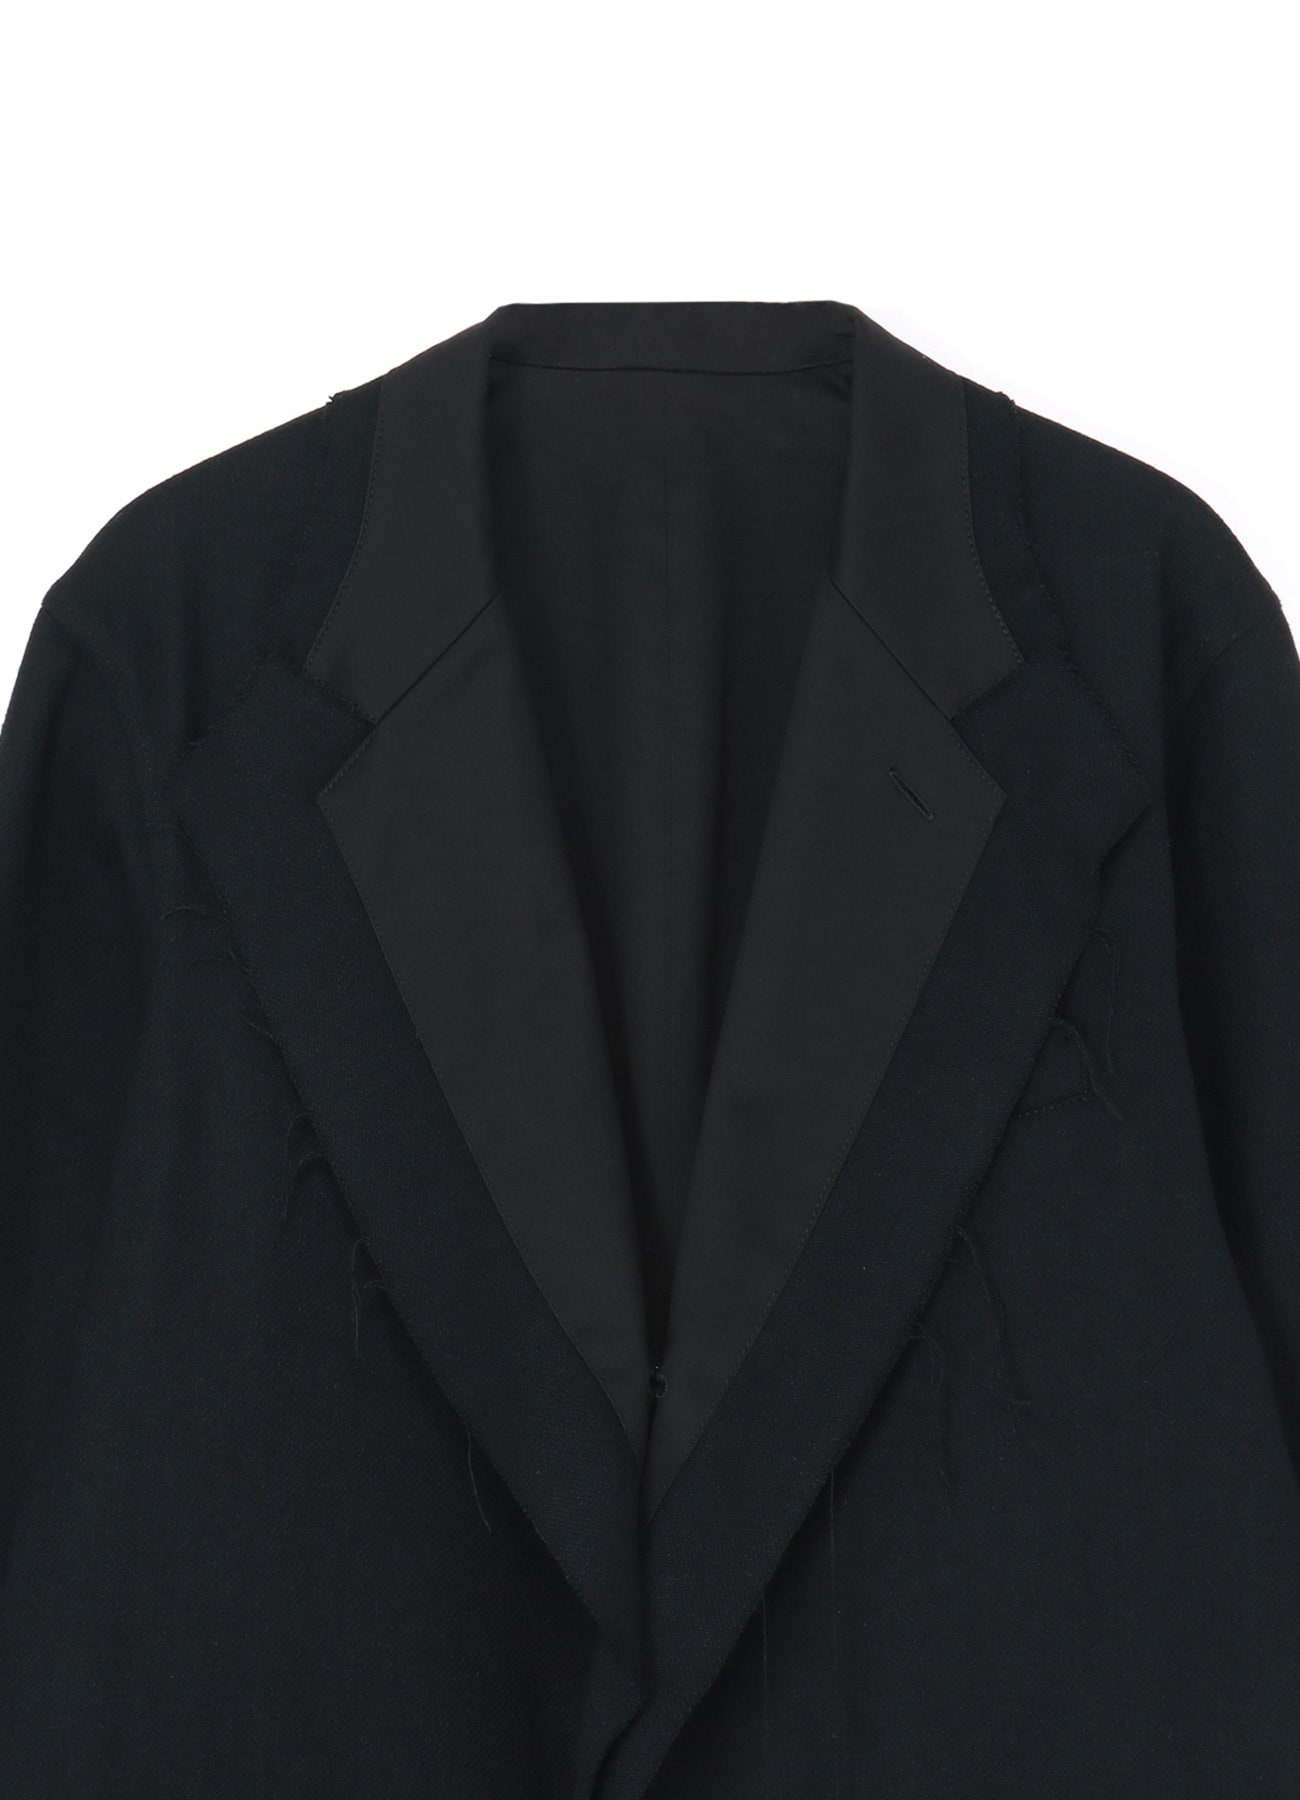 1/10 Flannel Cut Off Reversible Jacket